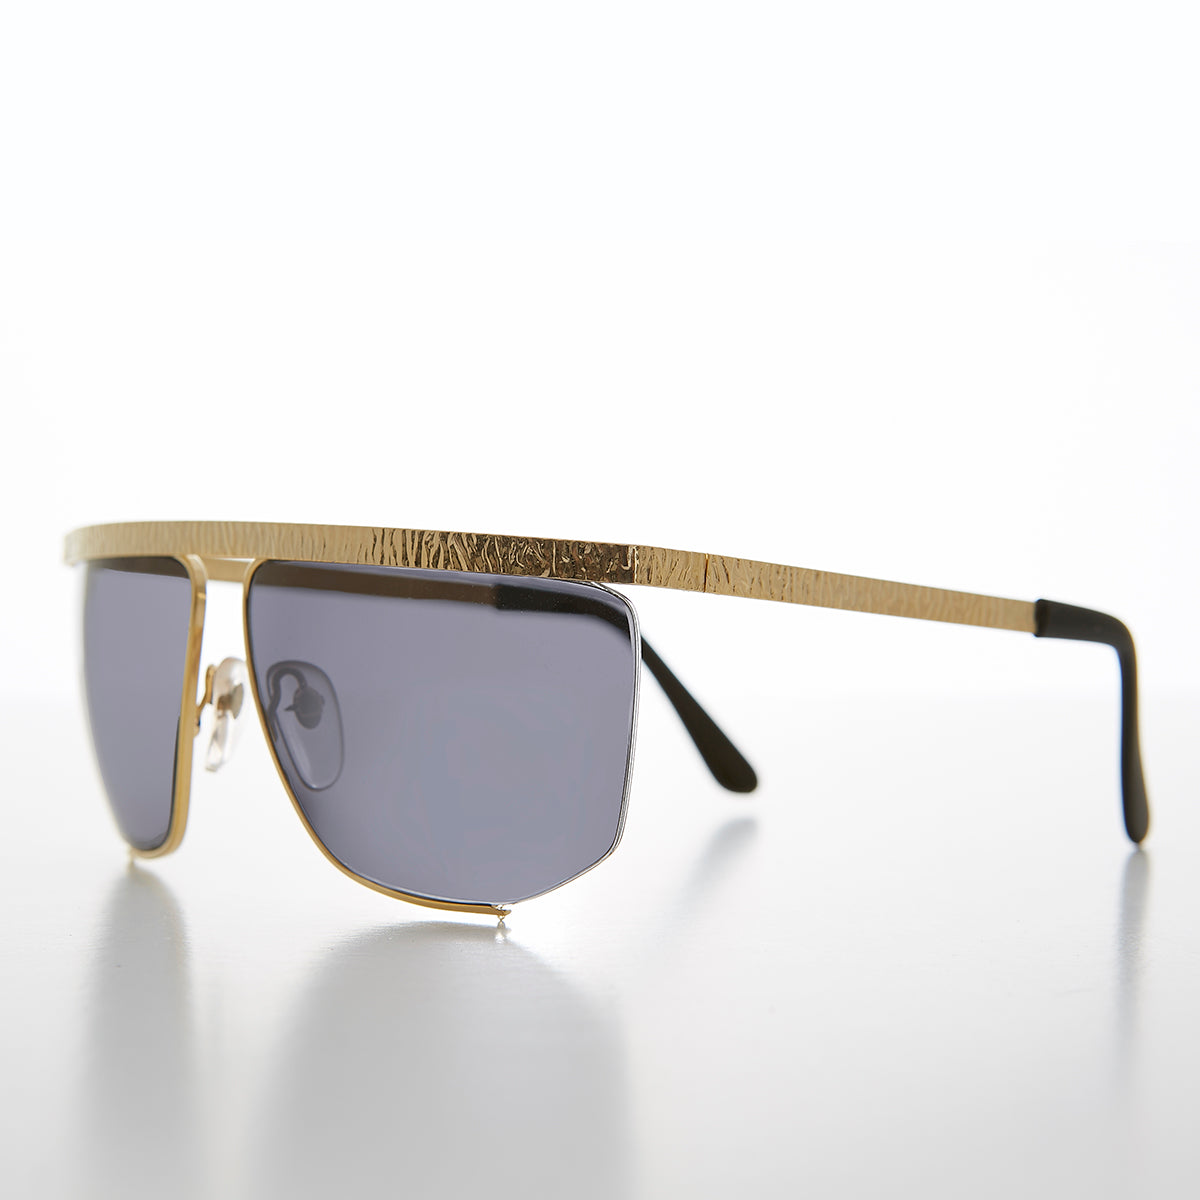 Louis Vuitton Easy Rider Sunglasses